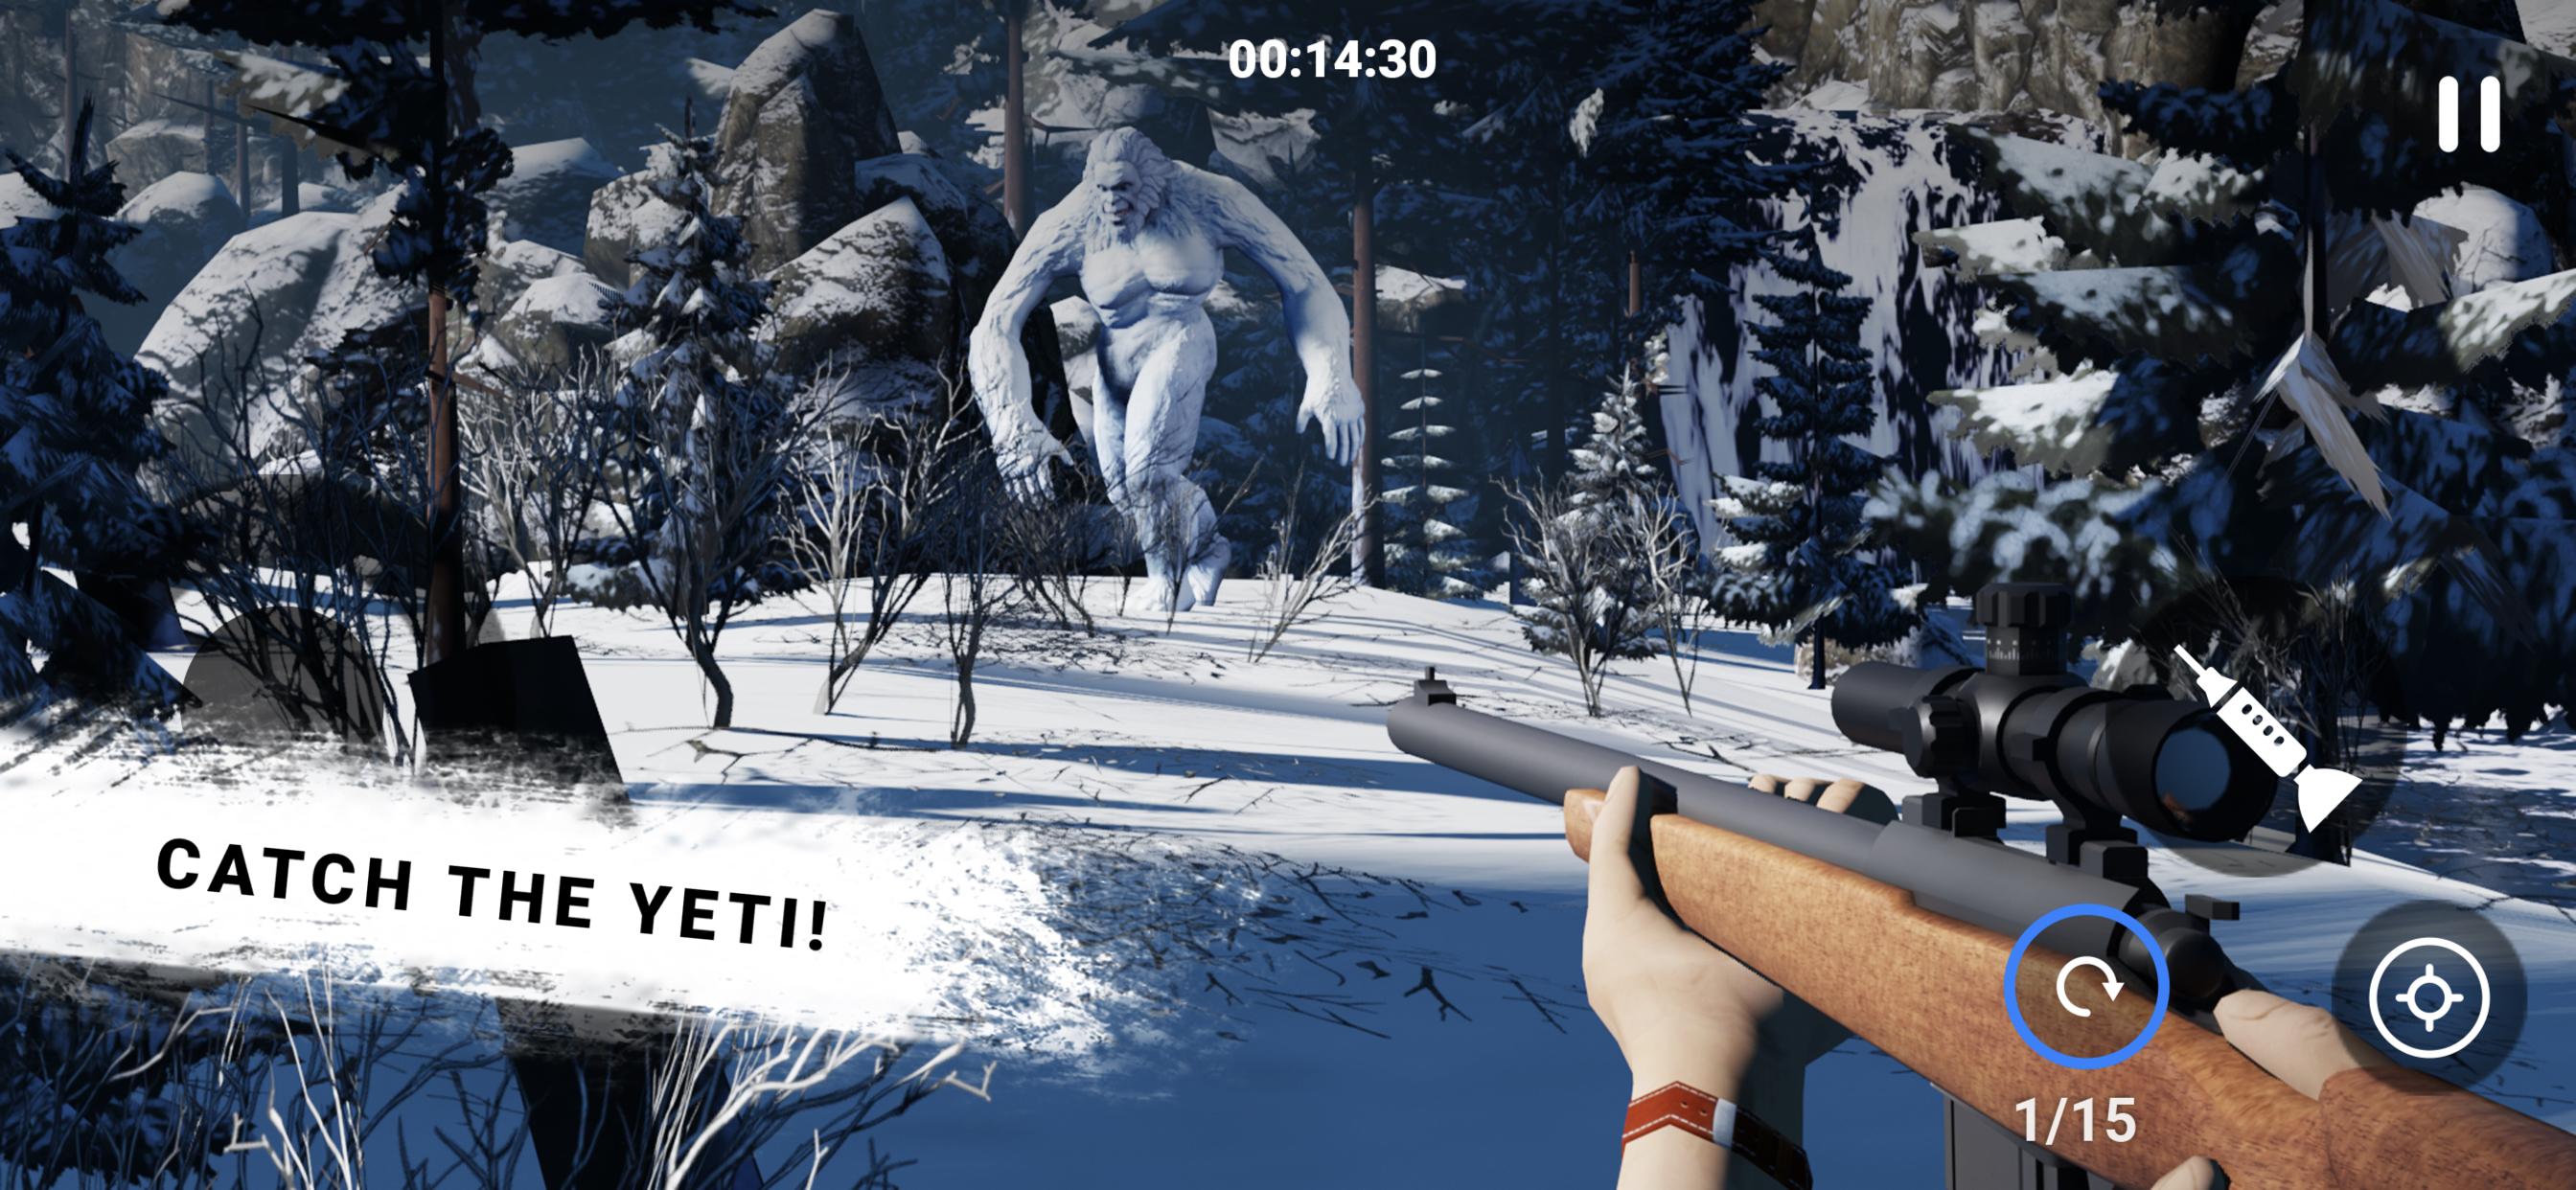 Download Bigfoot Yeti- Godzilla Monster android on PC